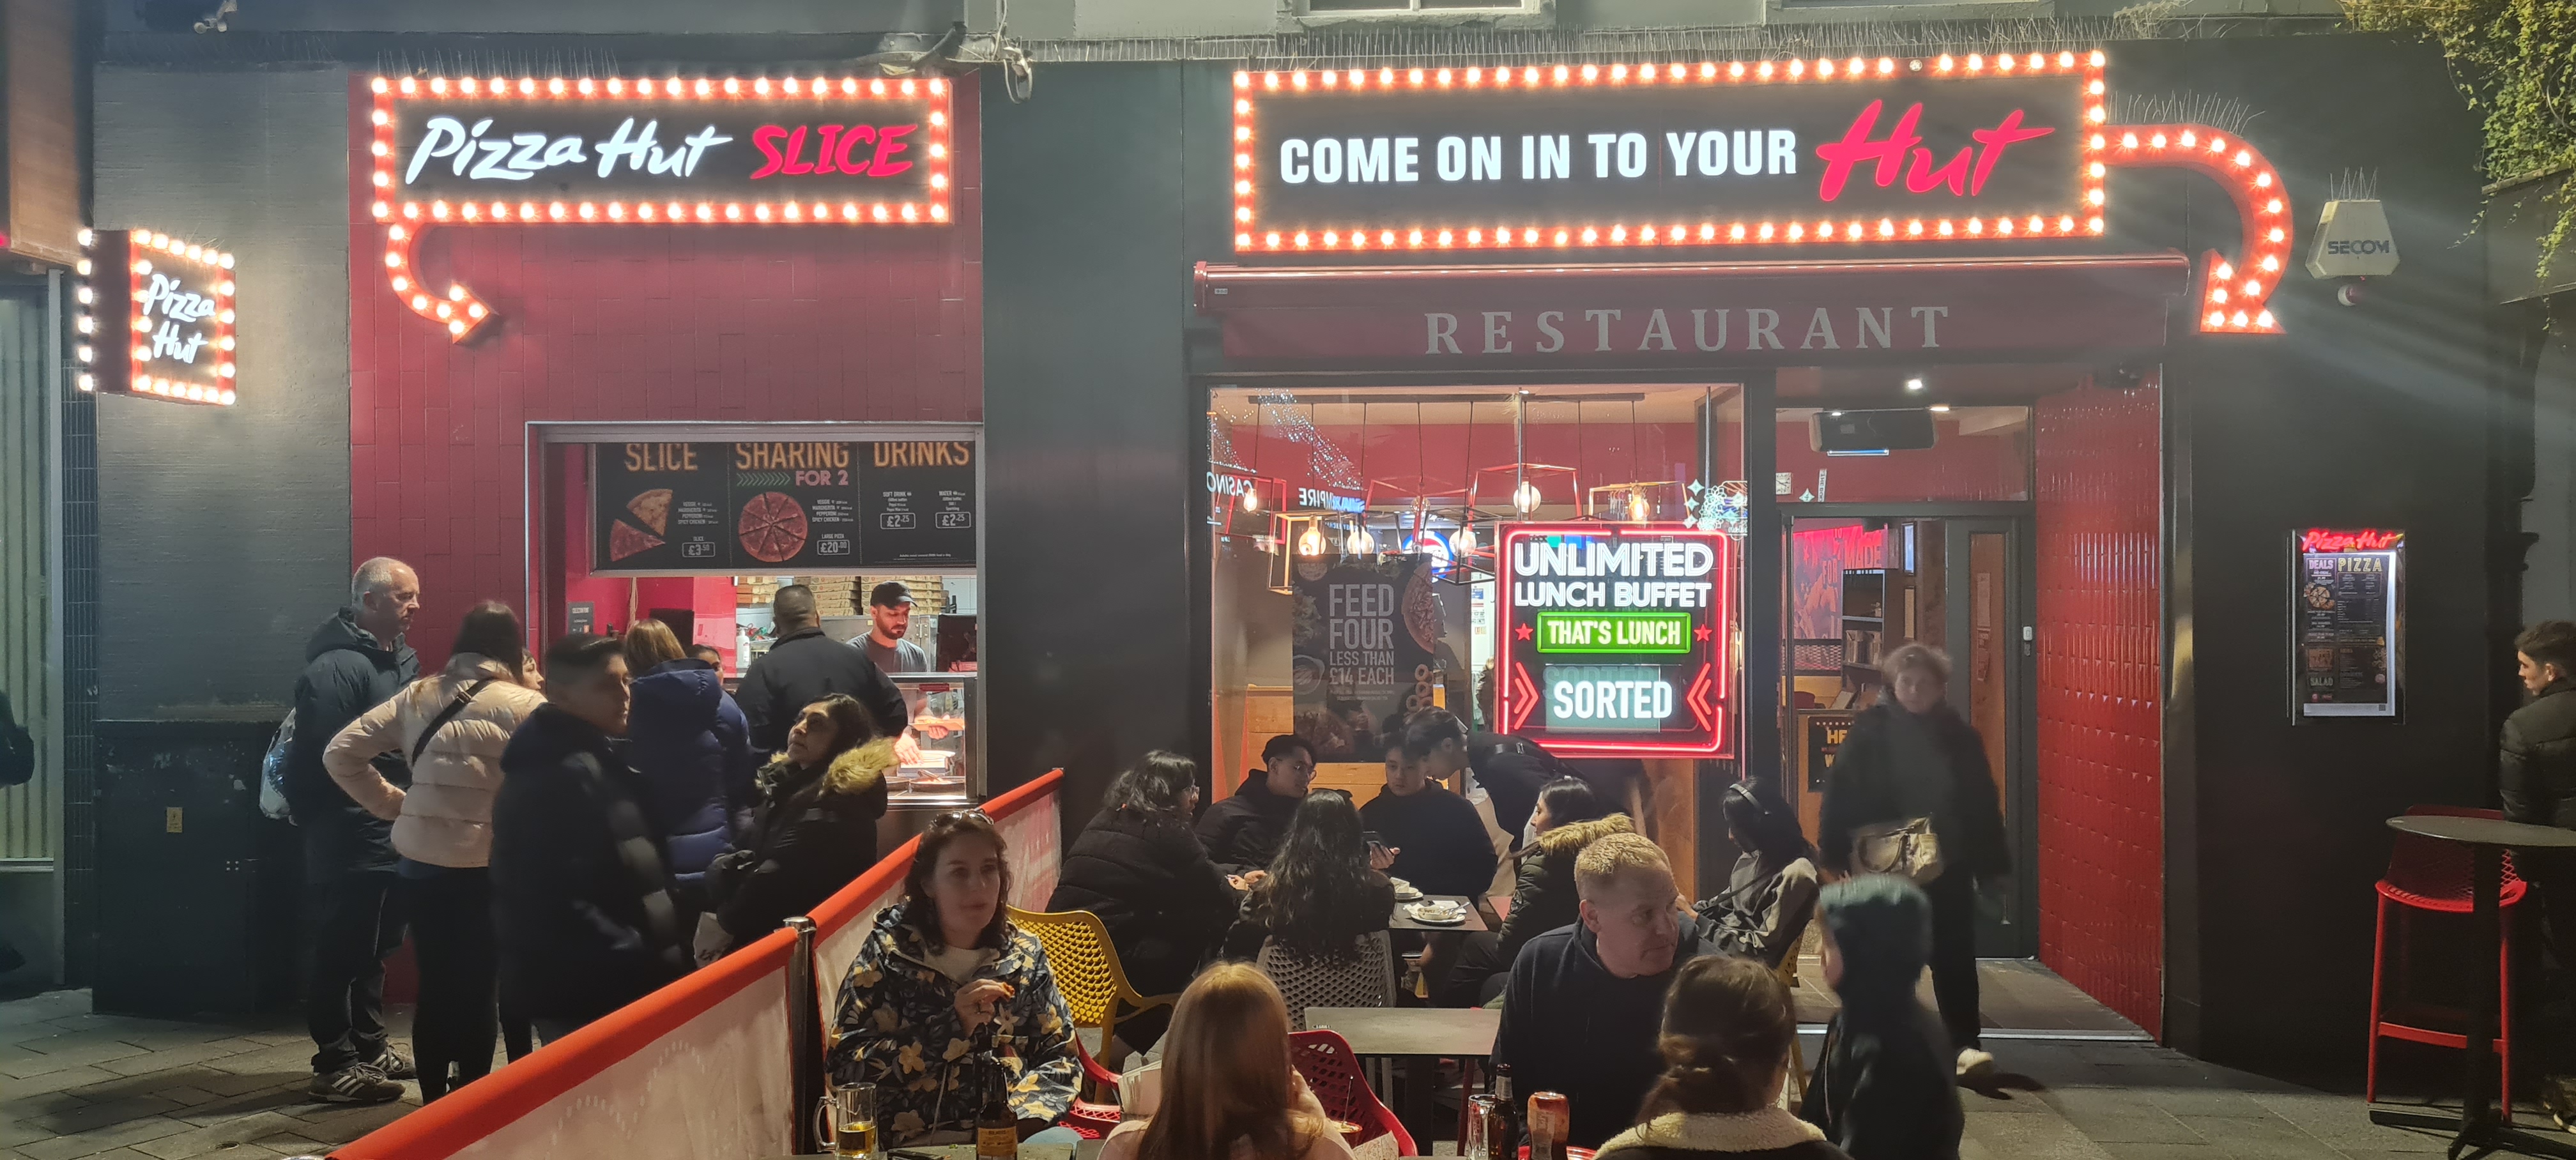 Pizza Hut Leicester Square (30 March)